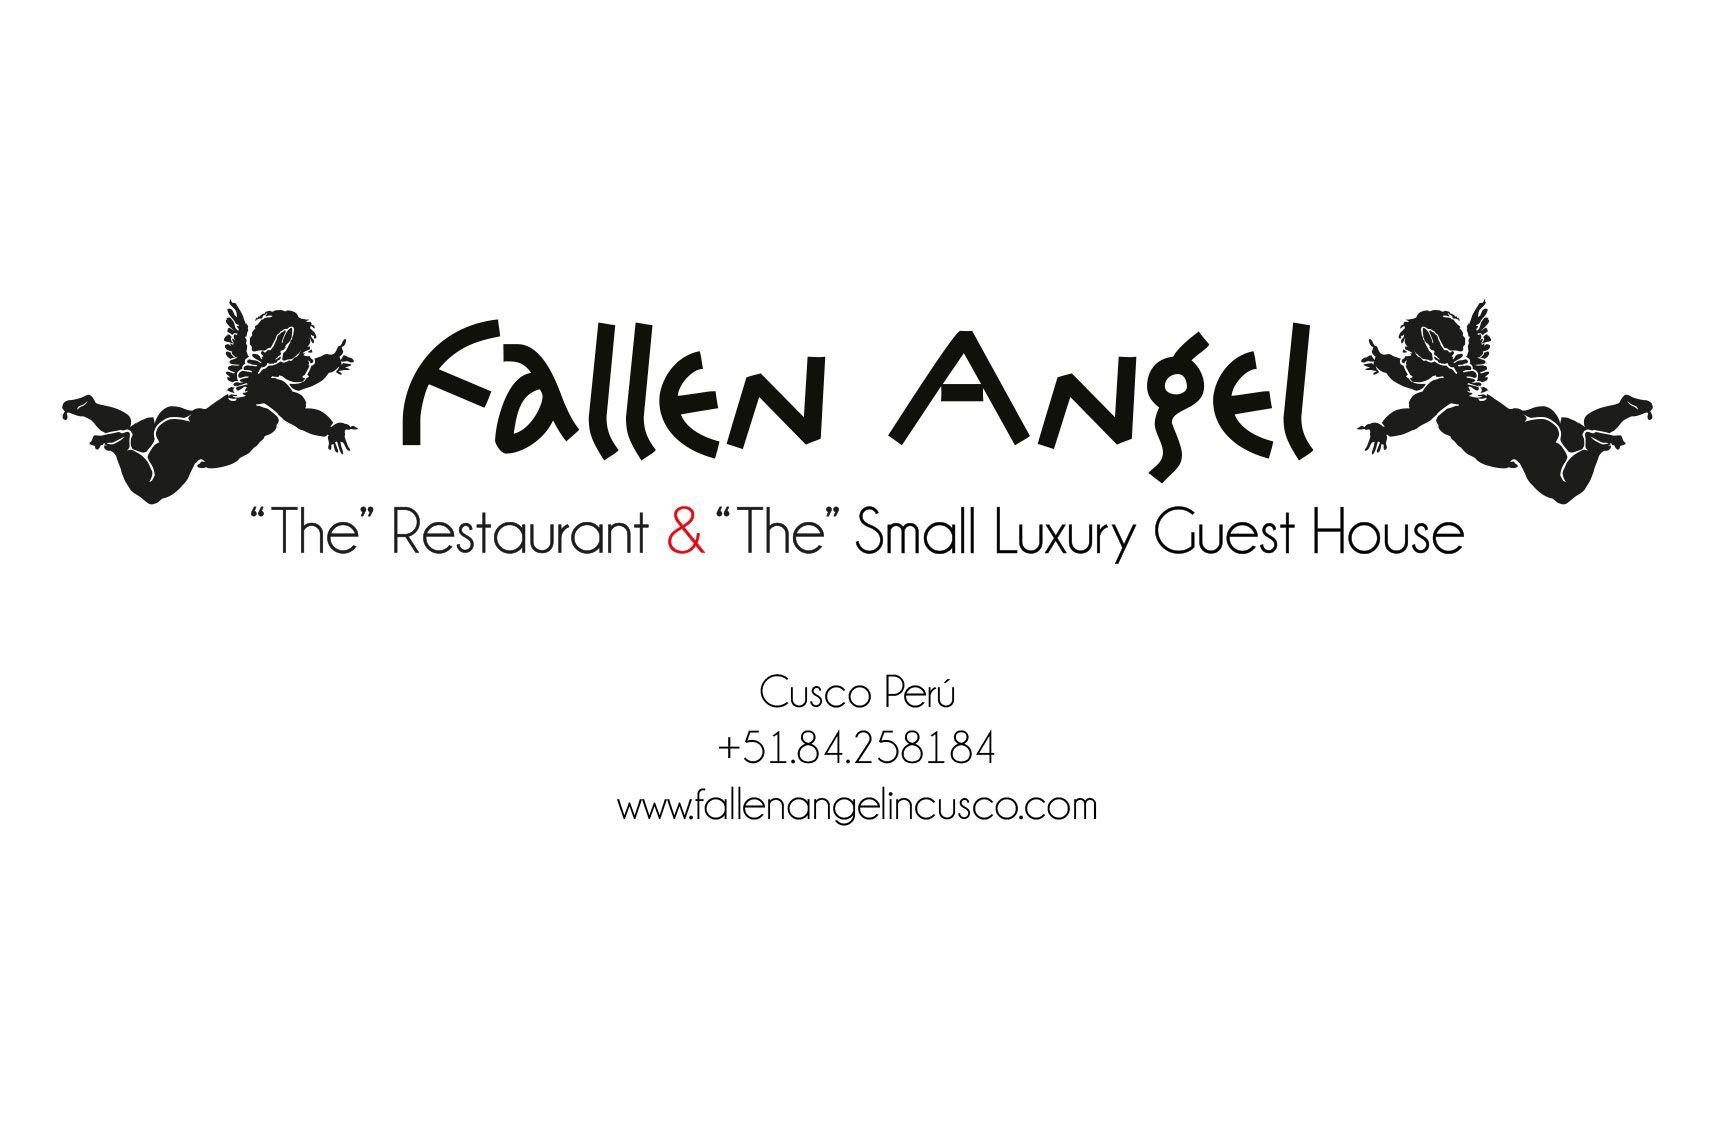 Small Angels Logo - Fallen Angel | 